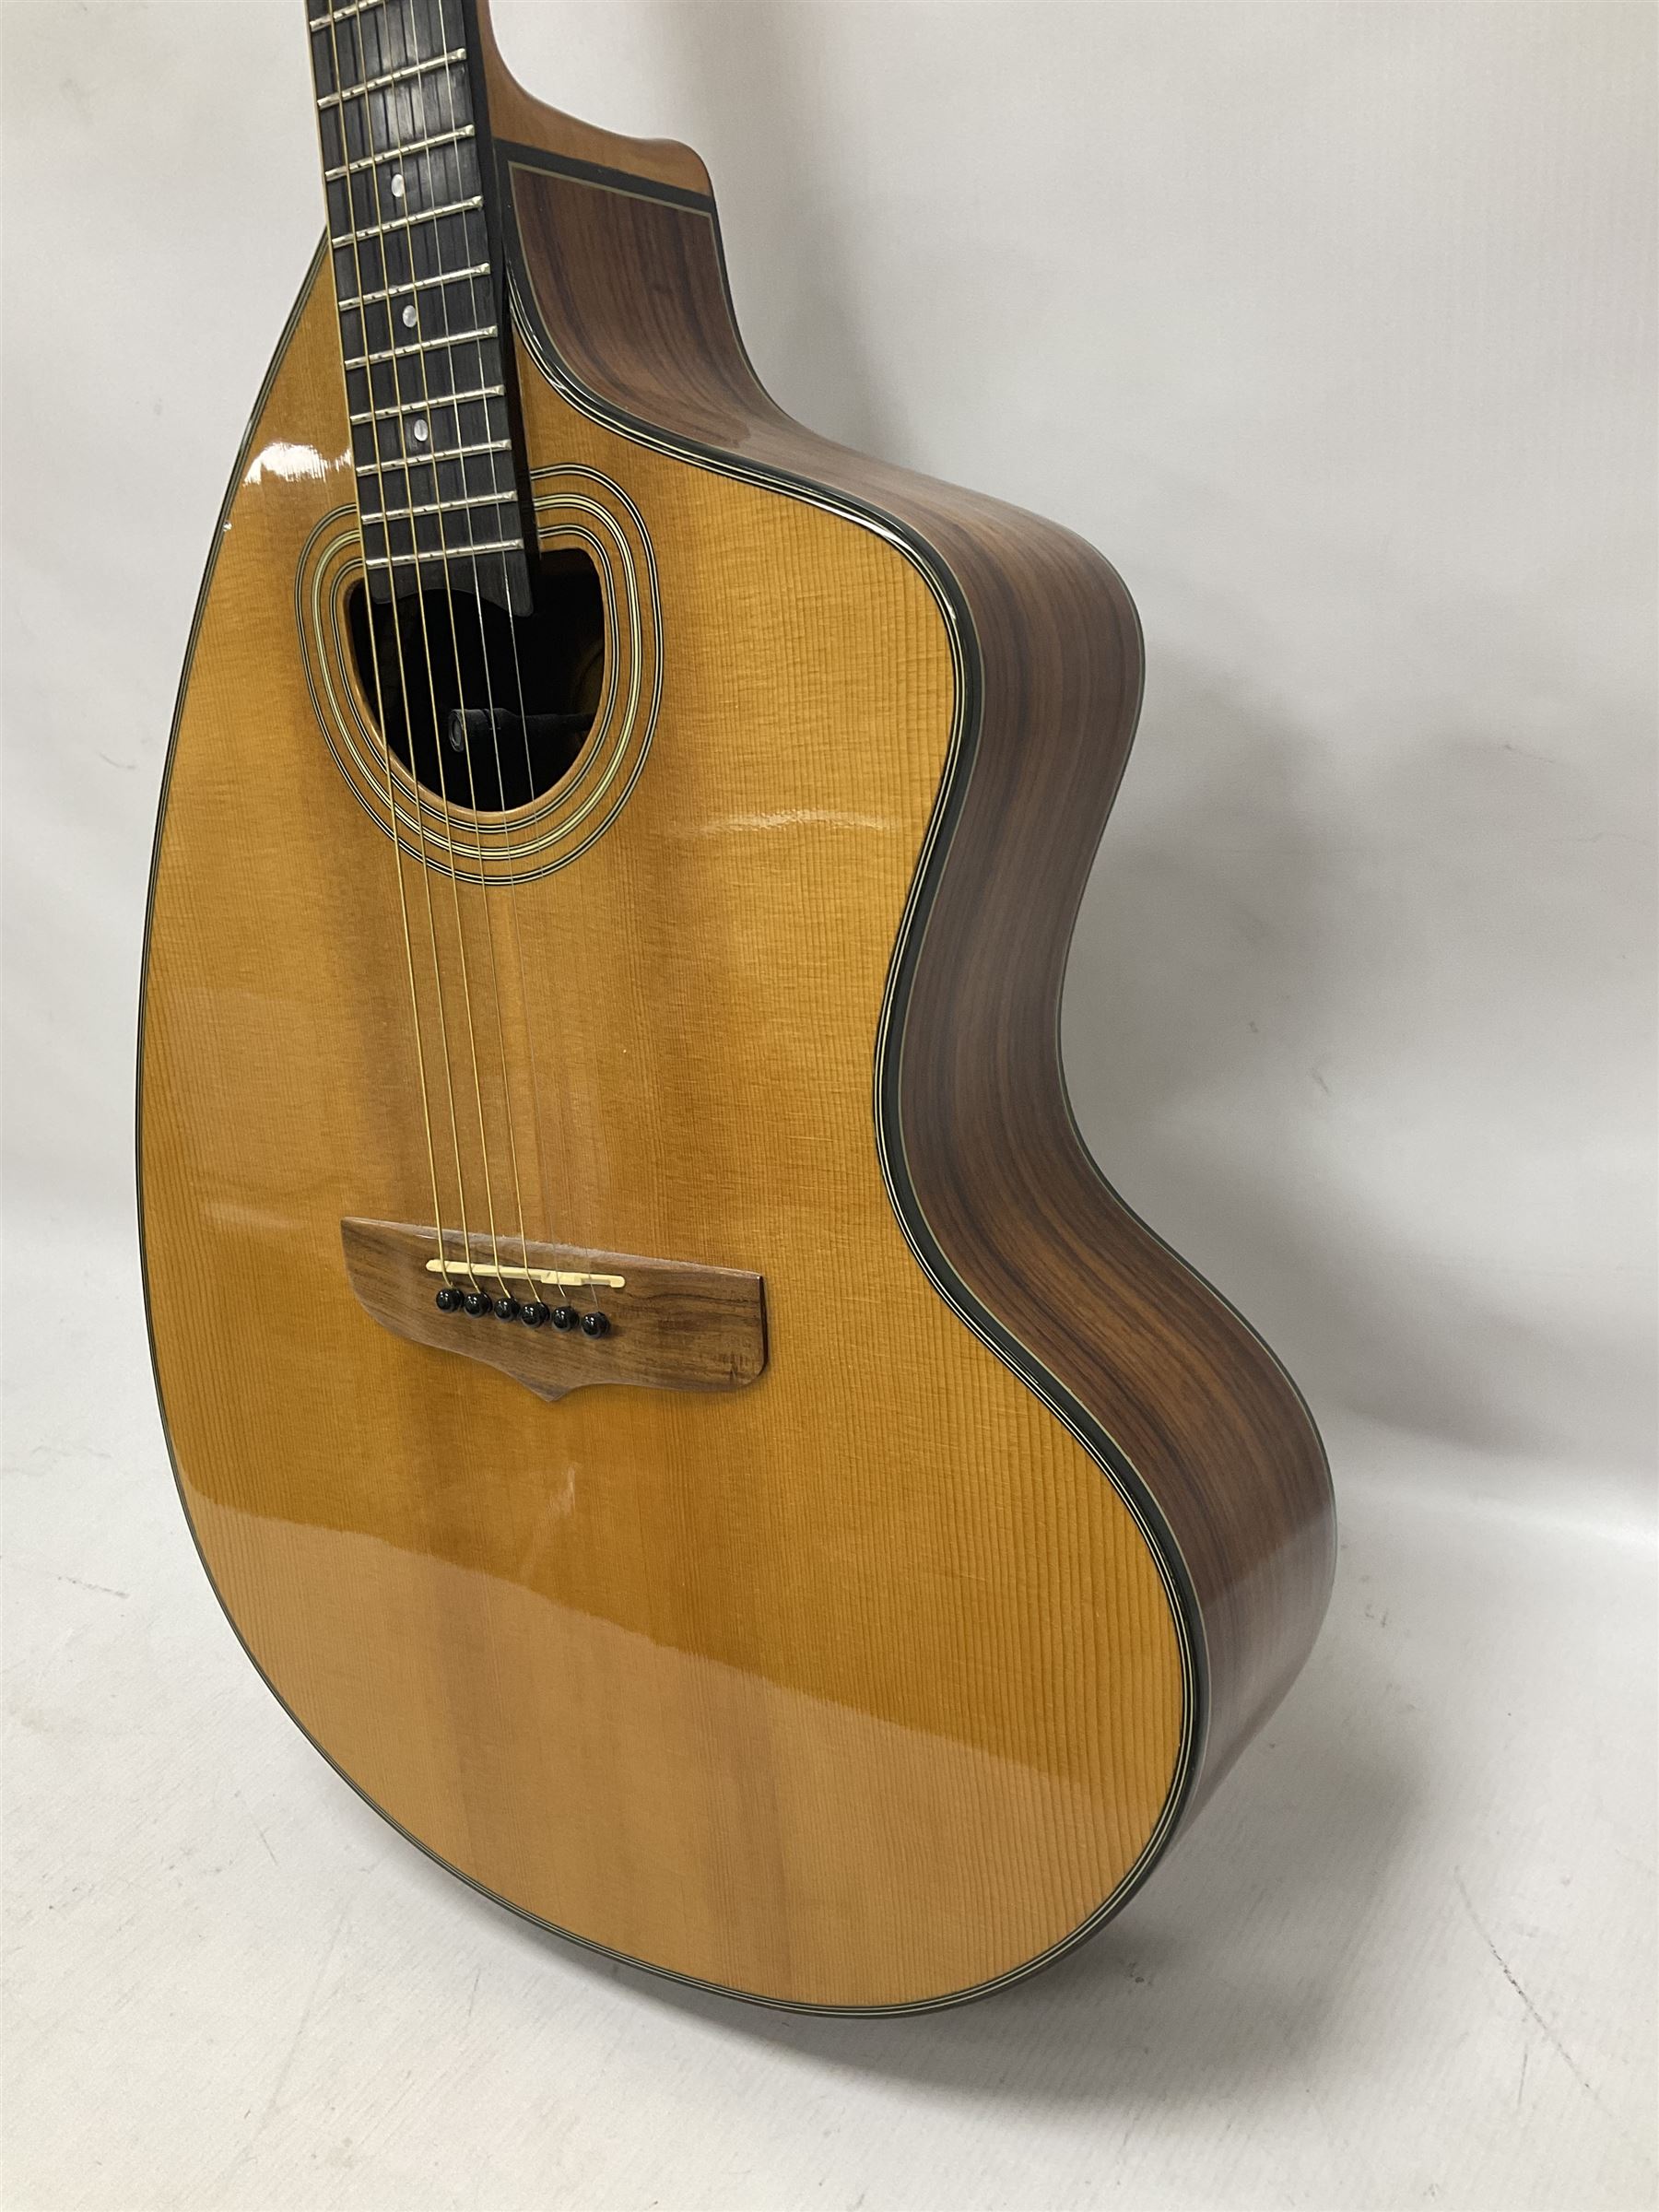 Brazilian Giannini Craviola six string acoustic guitar - Image 8 of 21